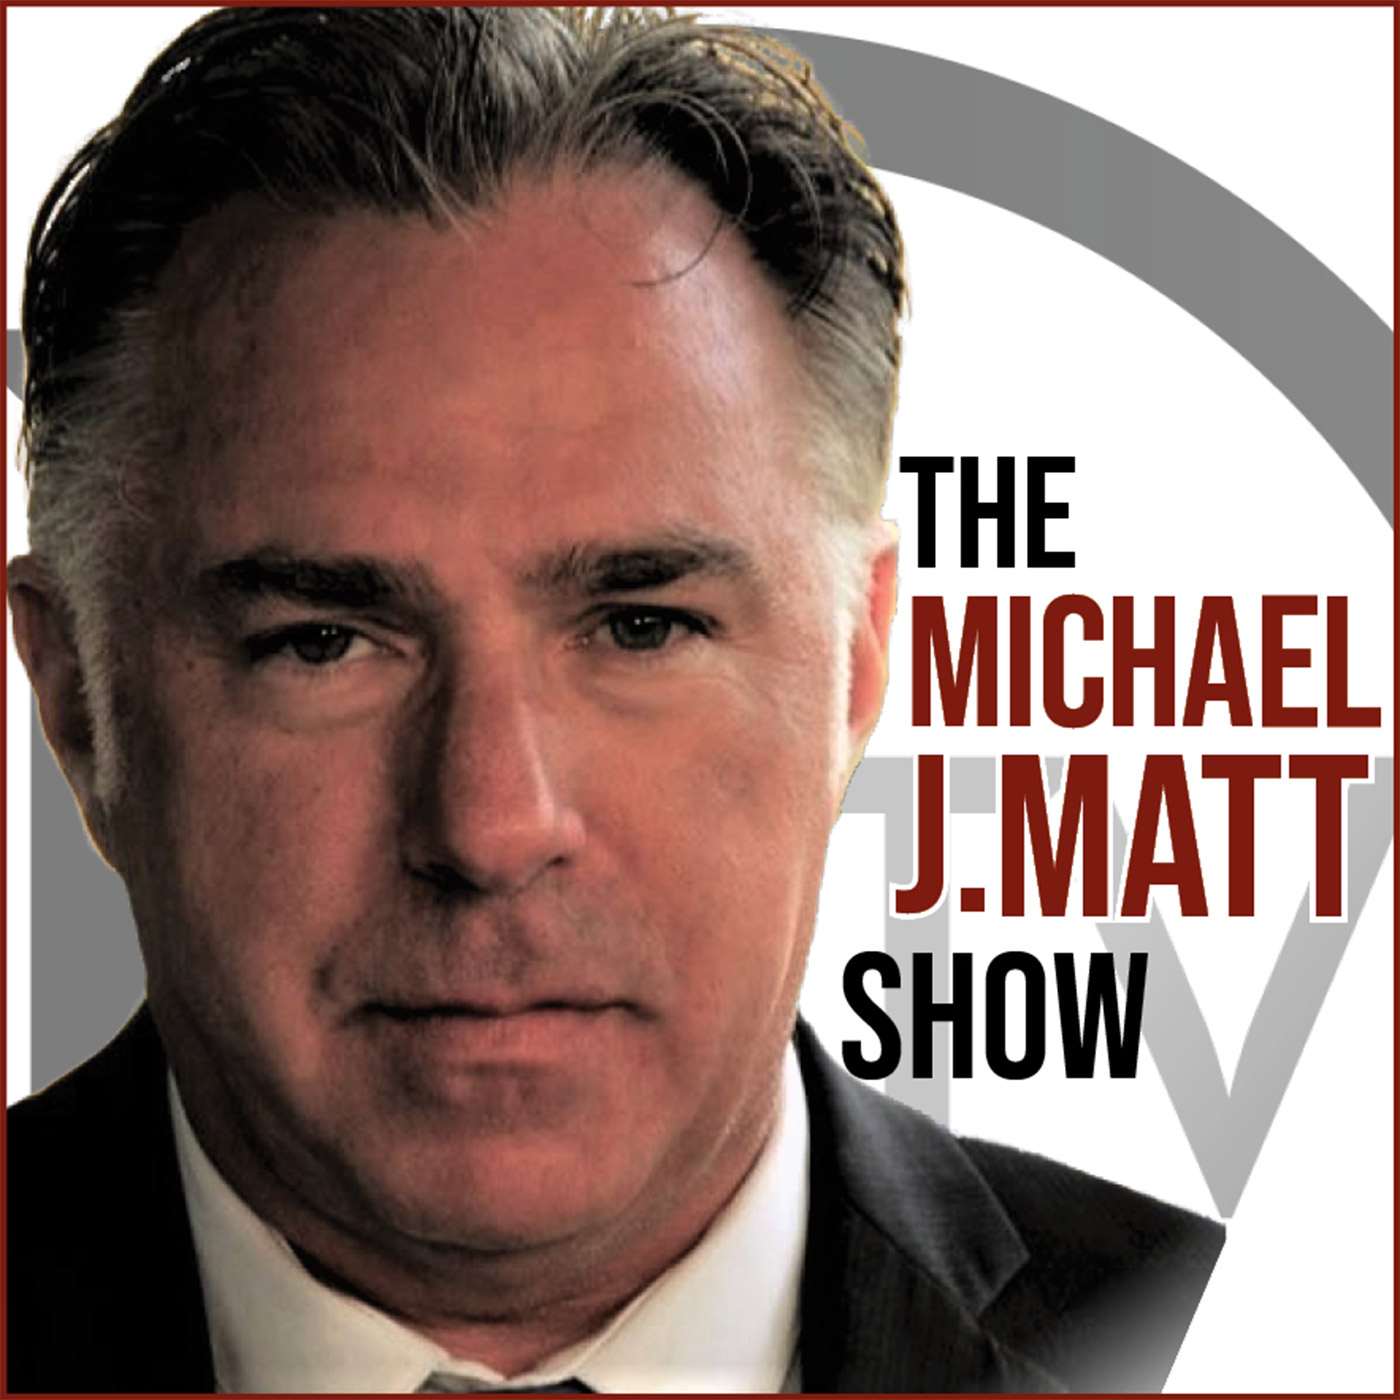 “TRADITIONALISTS ARE PROTESTANT!” (Michael Matt Answers the Critics)